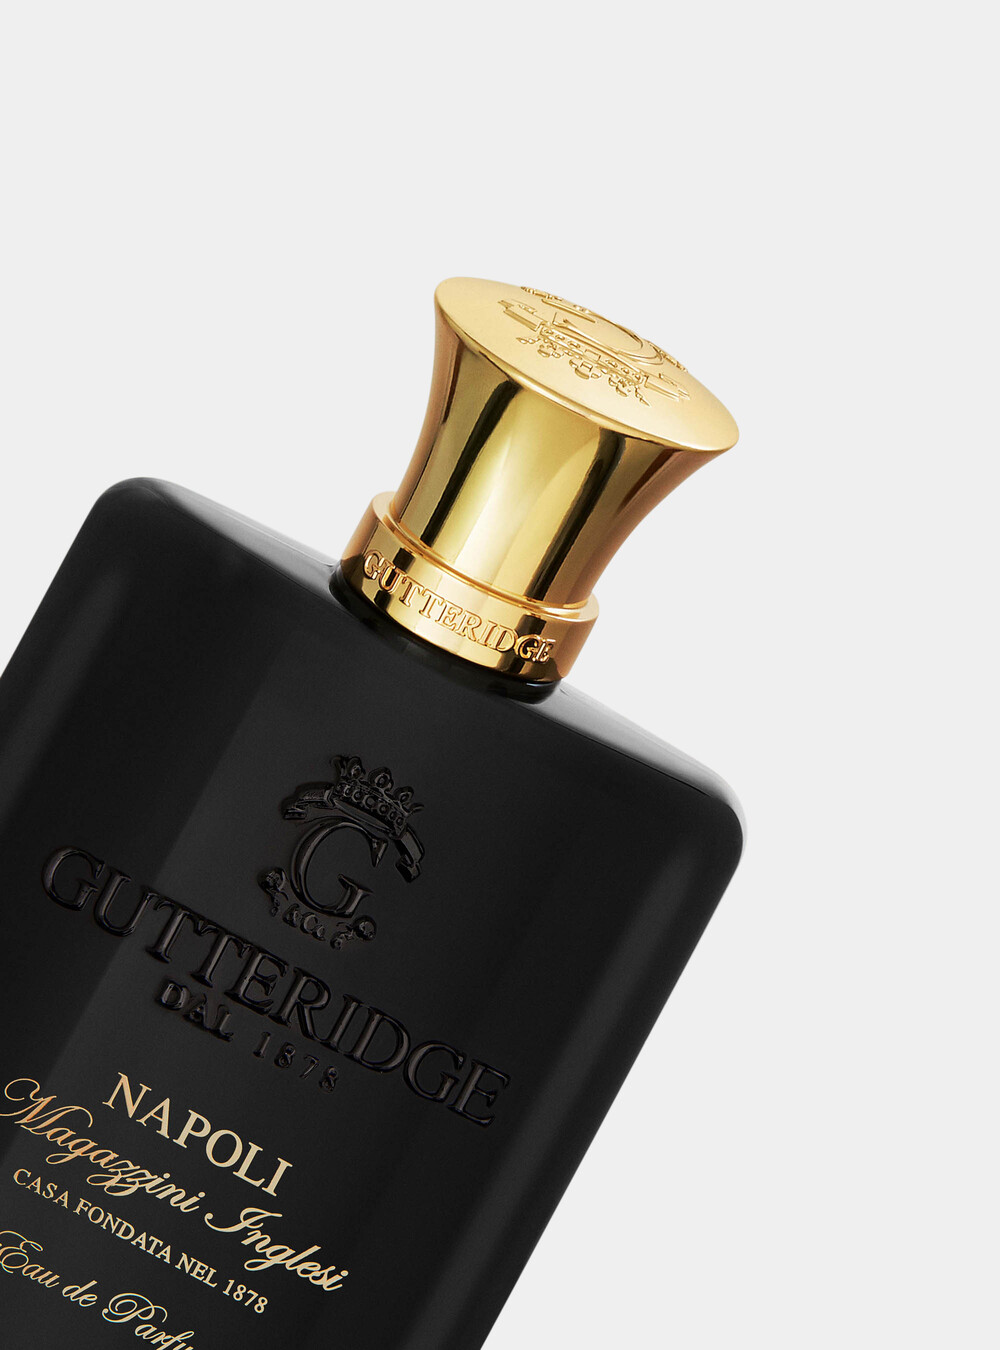 Gutteridge Perfume 500ml